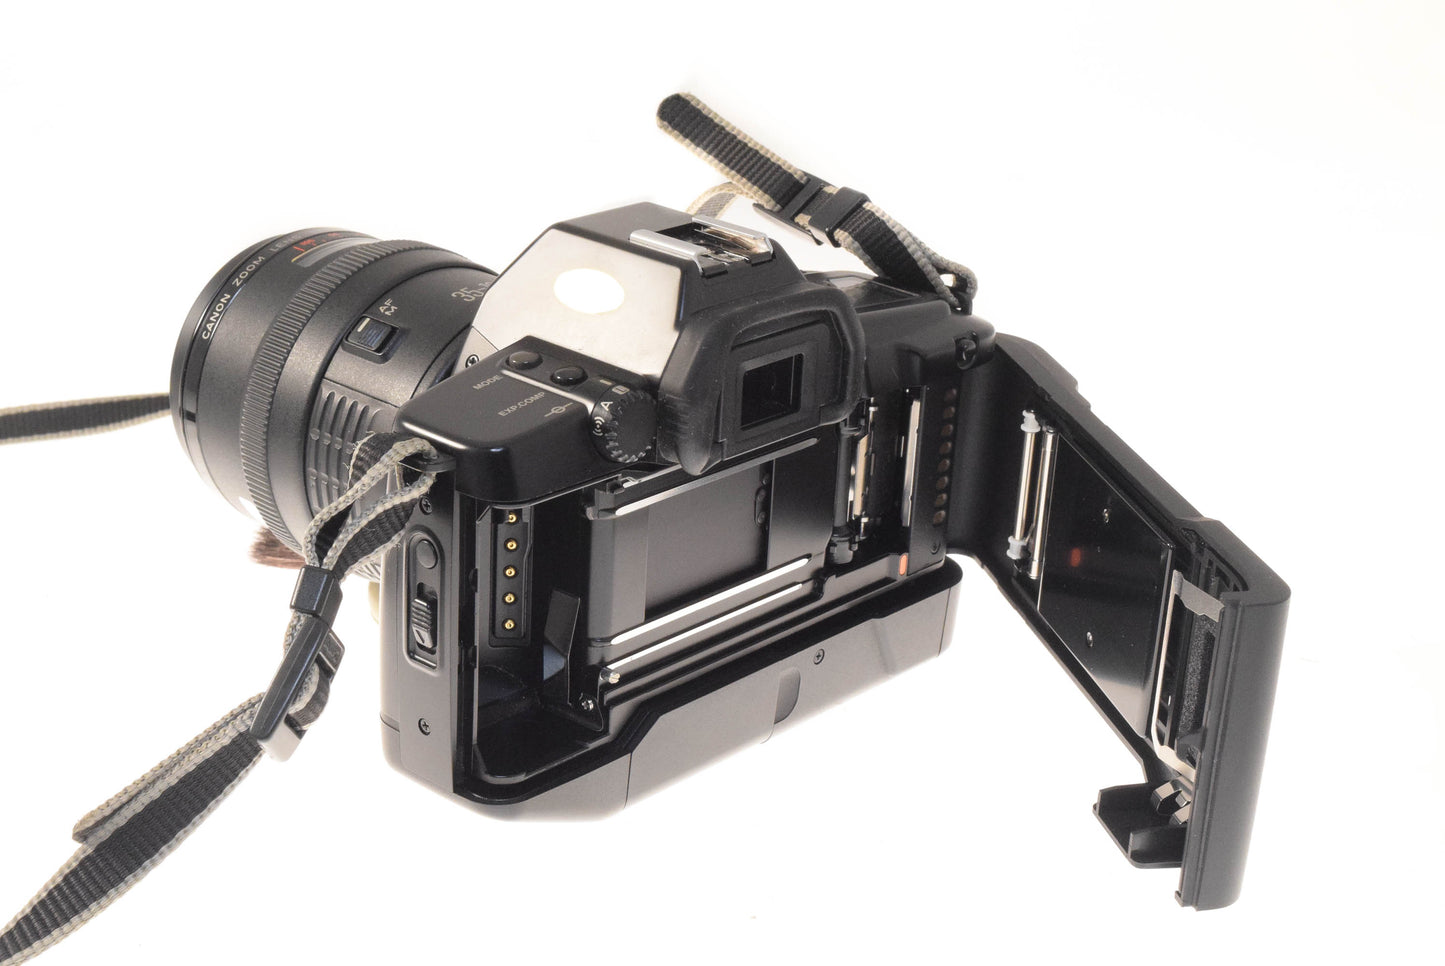 Canon EOS 650 + 35-105mm f3.5-4.5 EF